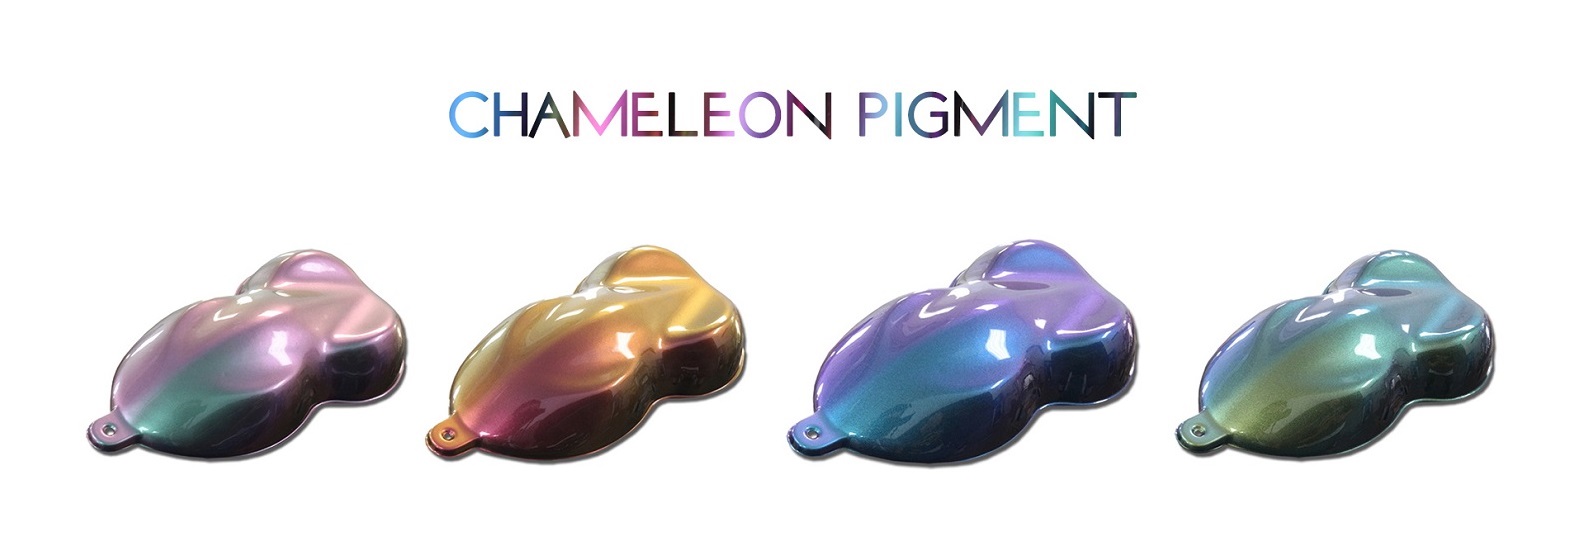 banner3_chameleon_pigments